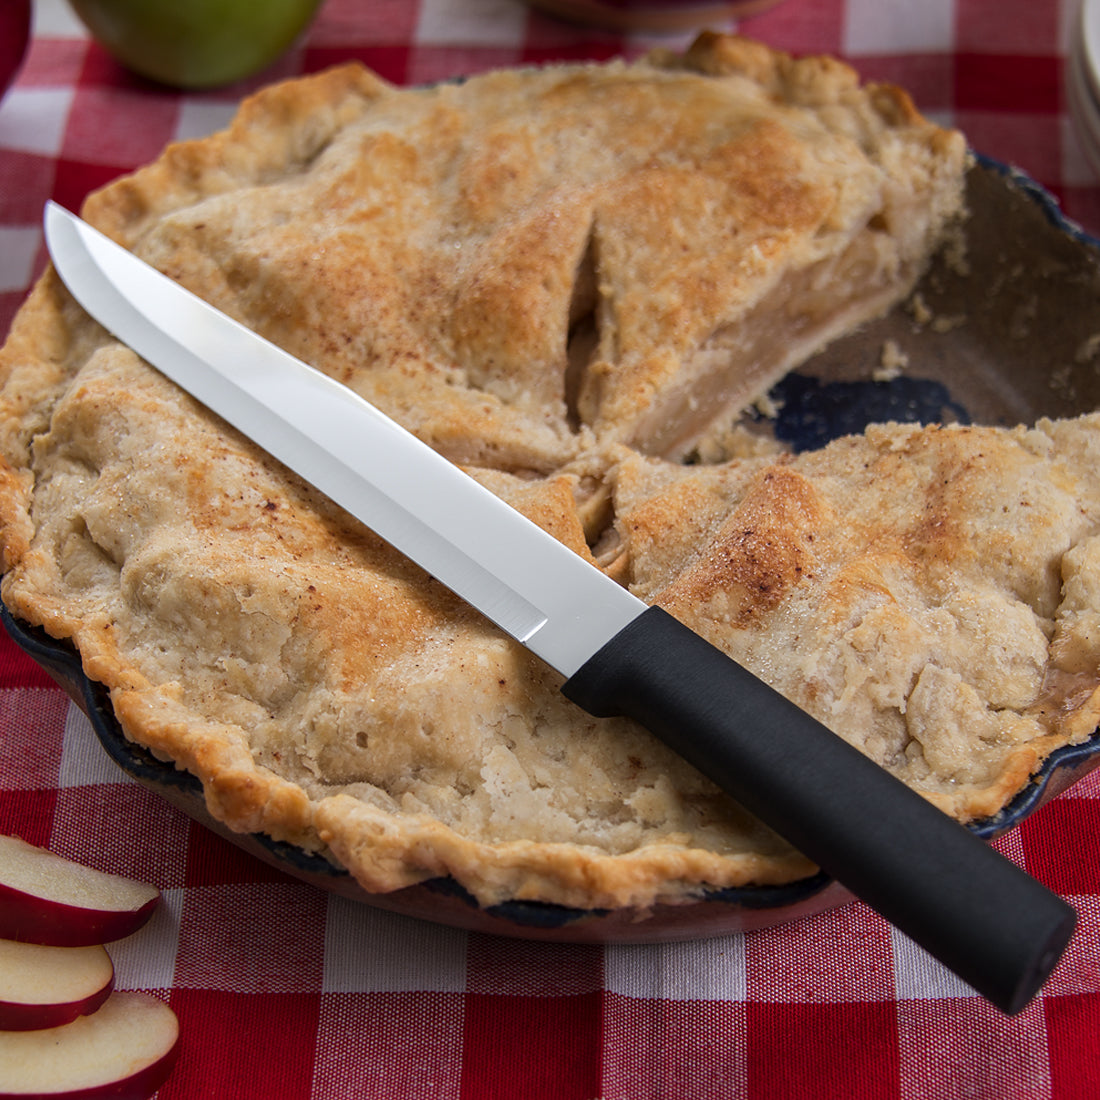 Rada Meat Slicer Knife W207 w/ 7 blade, Kitchen cutlery, slice meats + USA  made